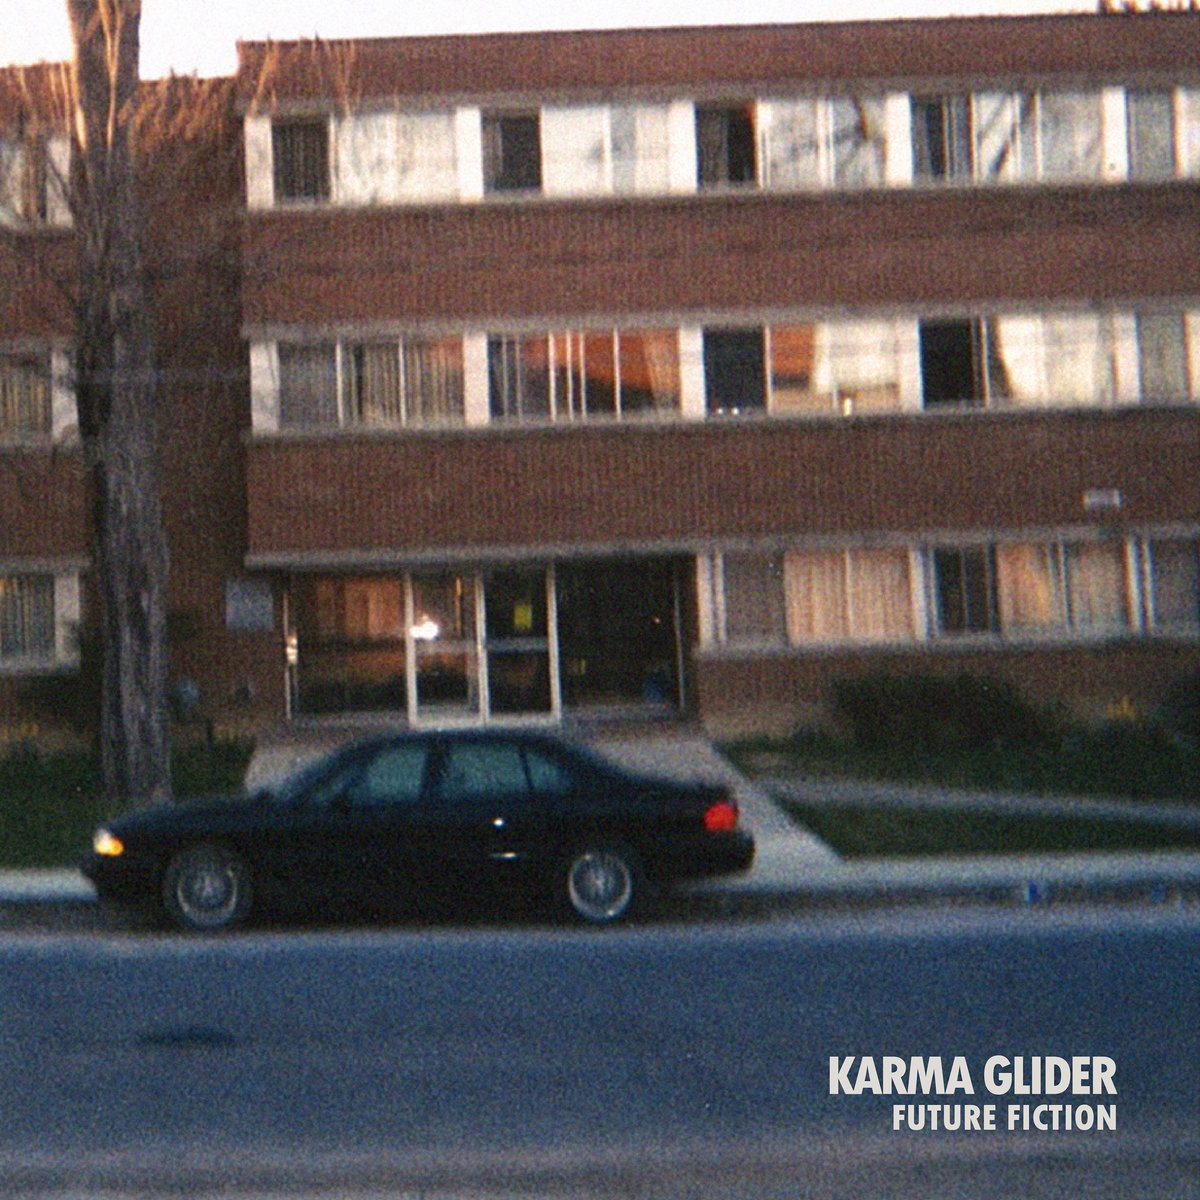 Karma Glider, Future Fiction: REVIEW